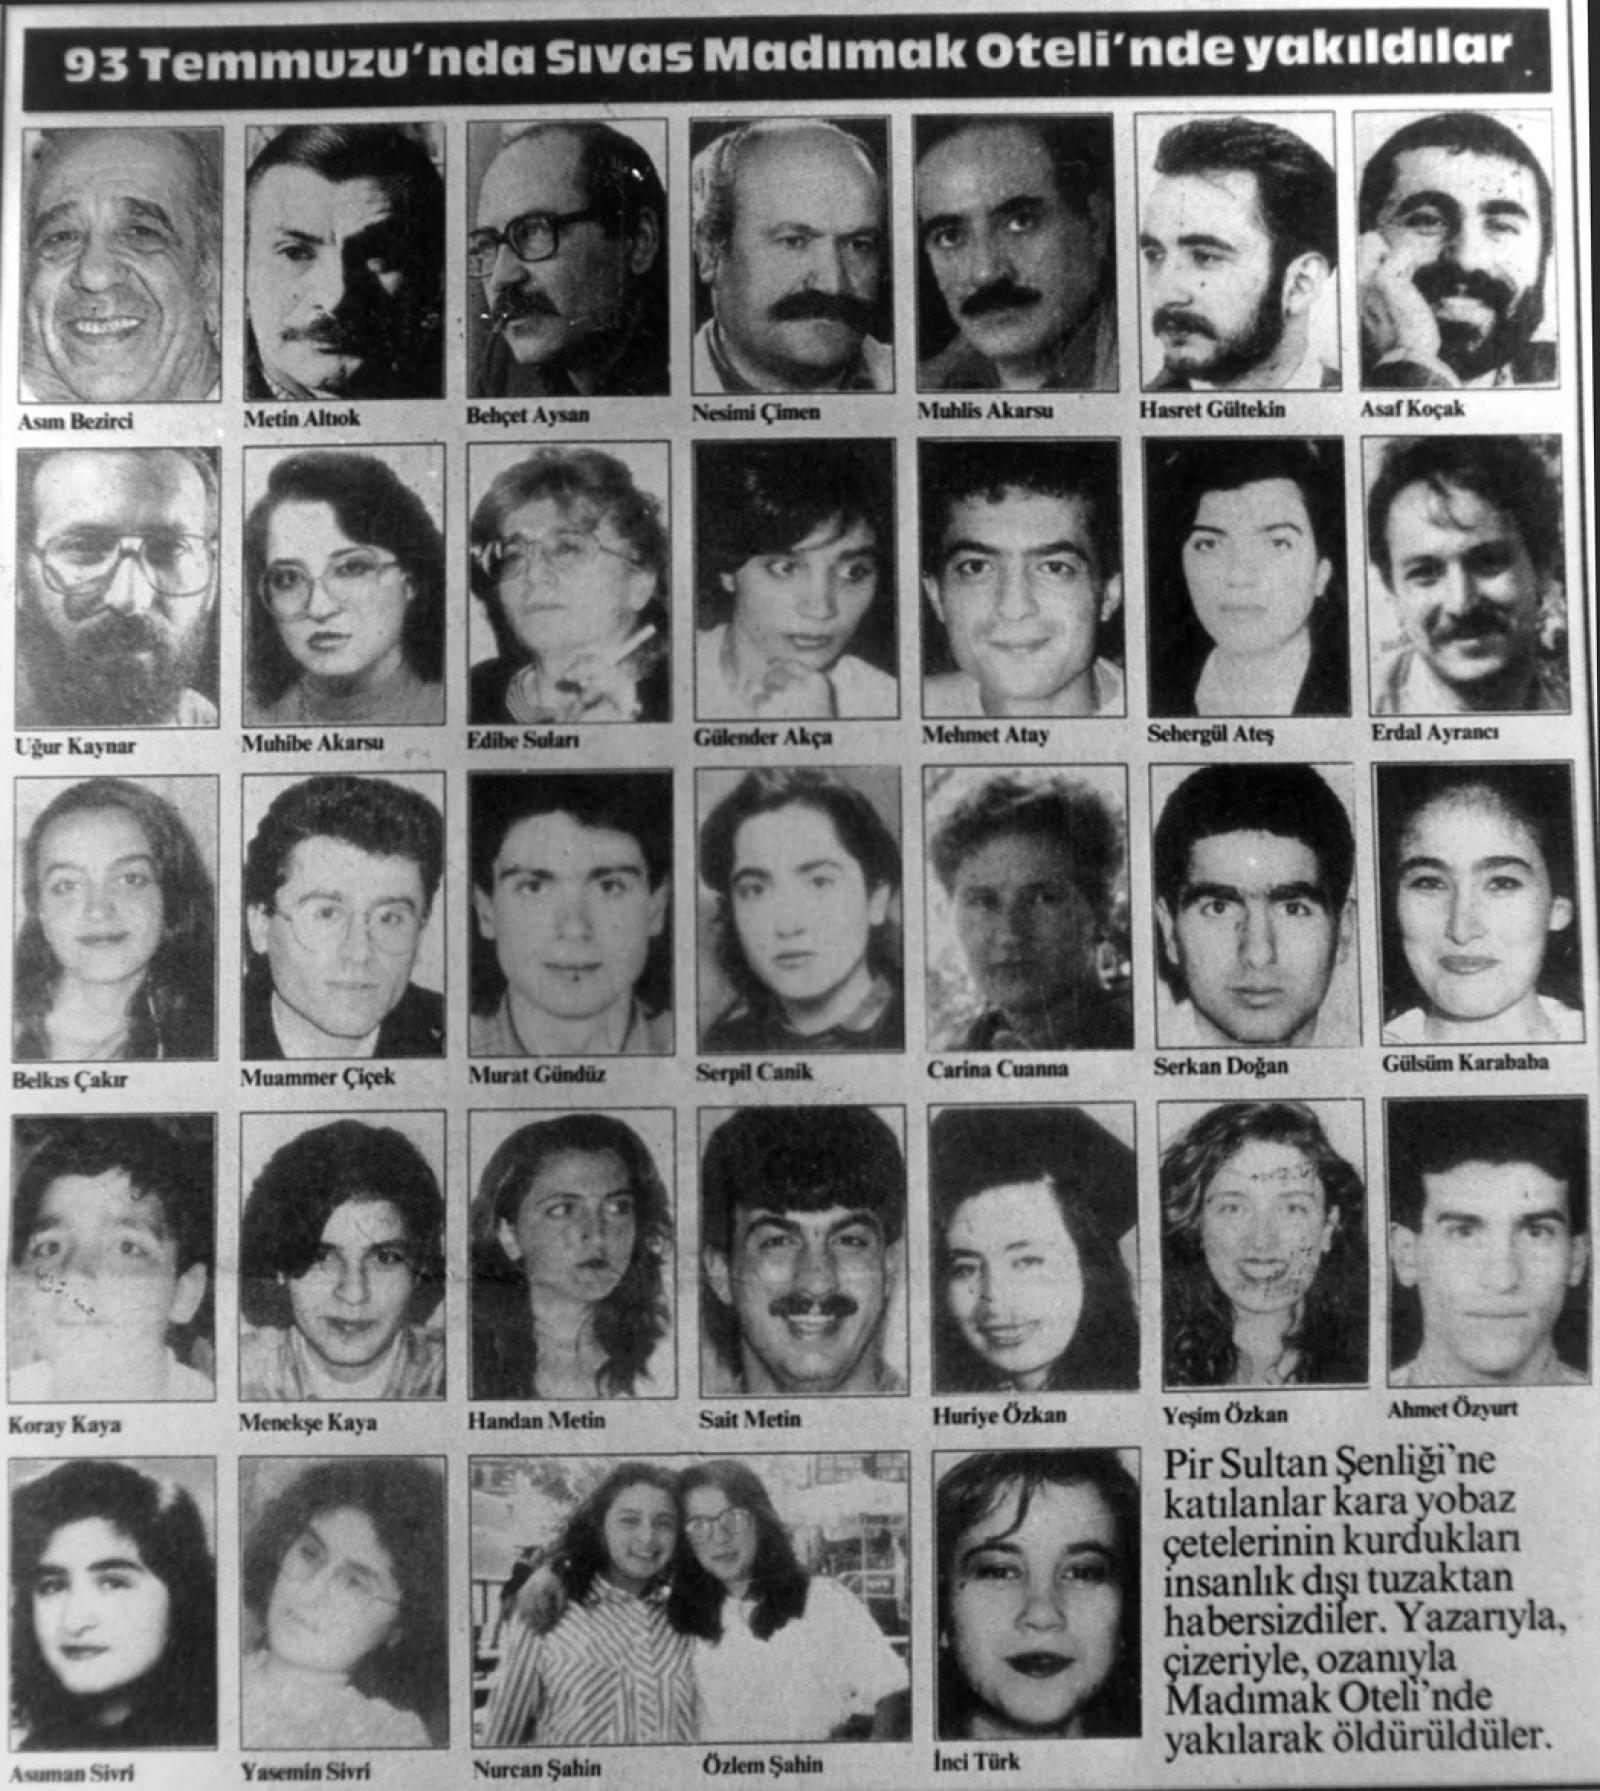 Sivas Massacre, Pictures of the victims, Cumhuriyet Newspaper, 2 July 1994, Sivas.